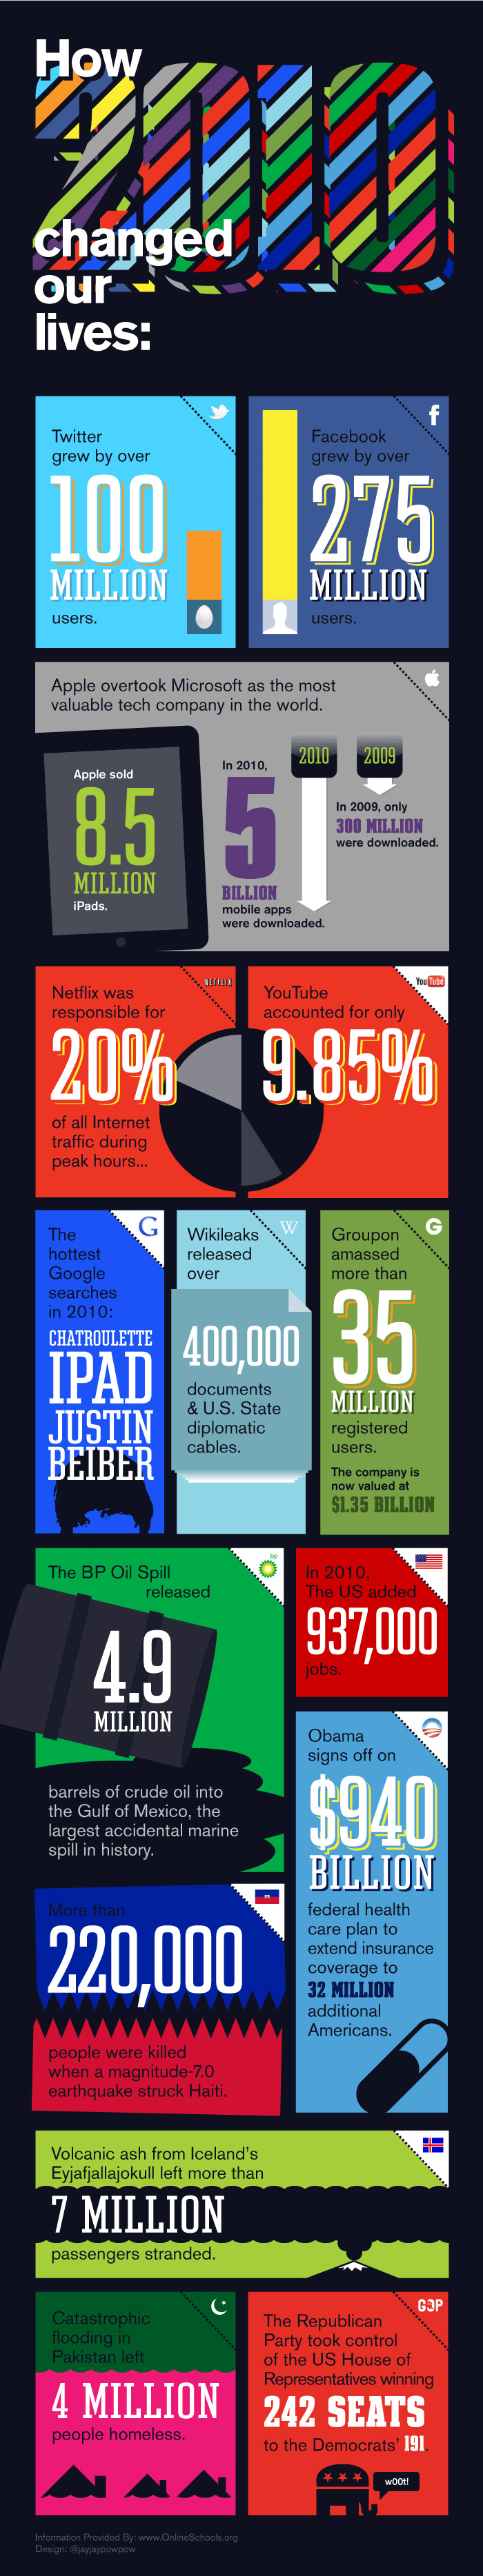 2010_infographic.jpg